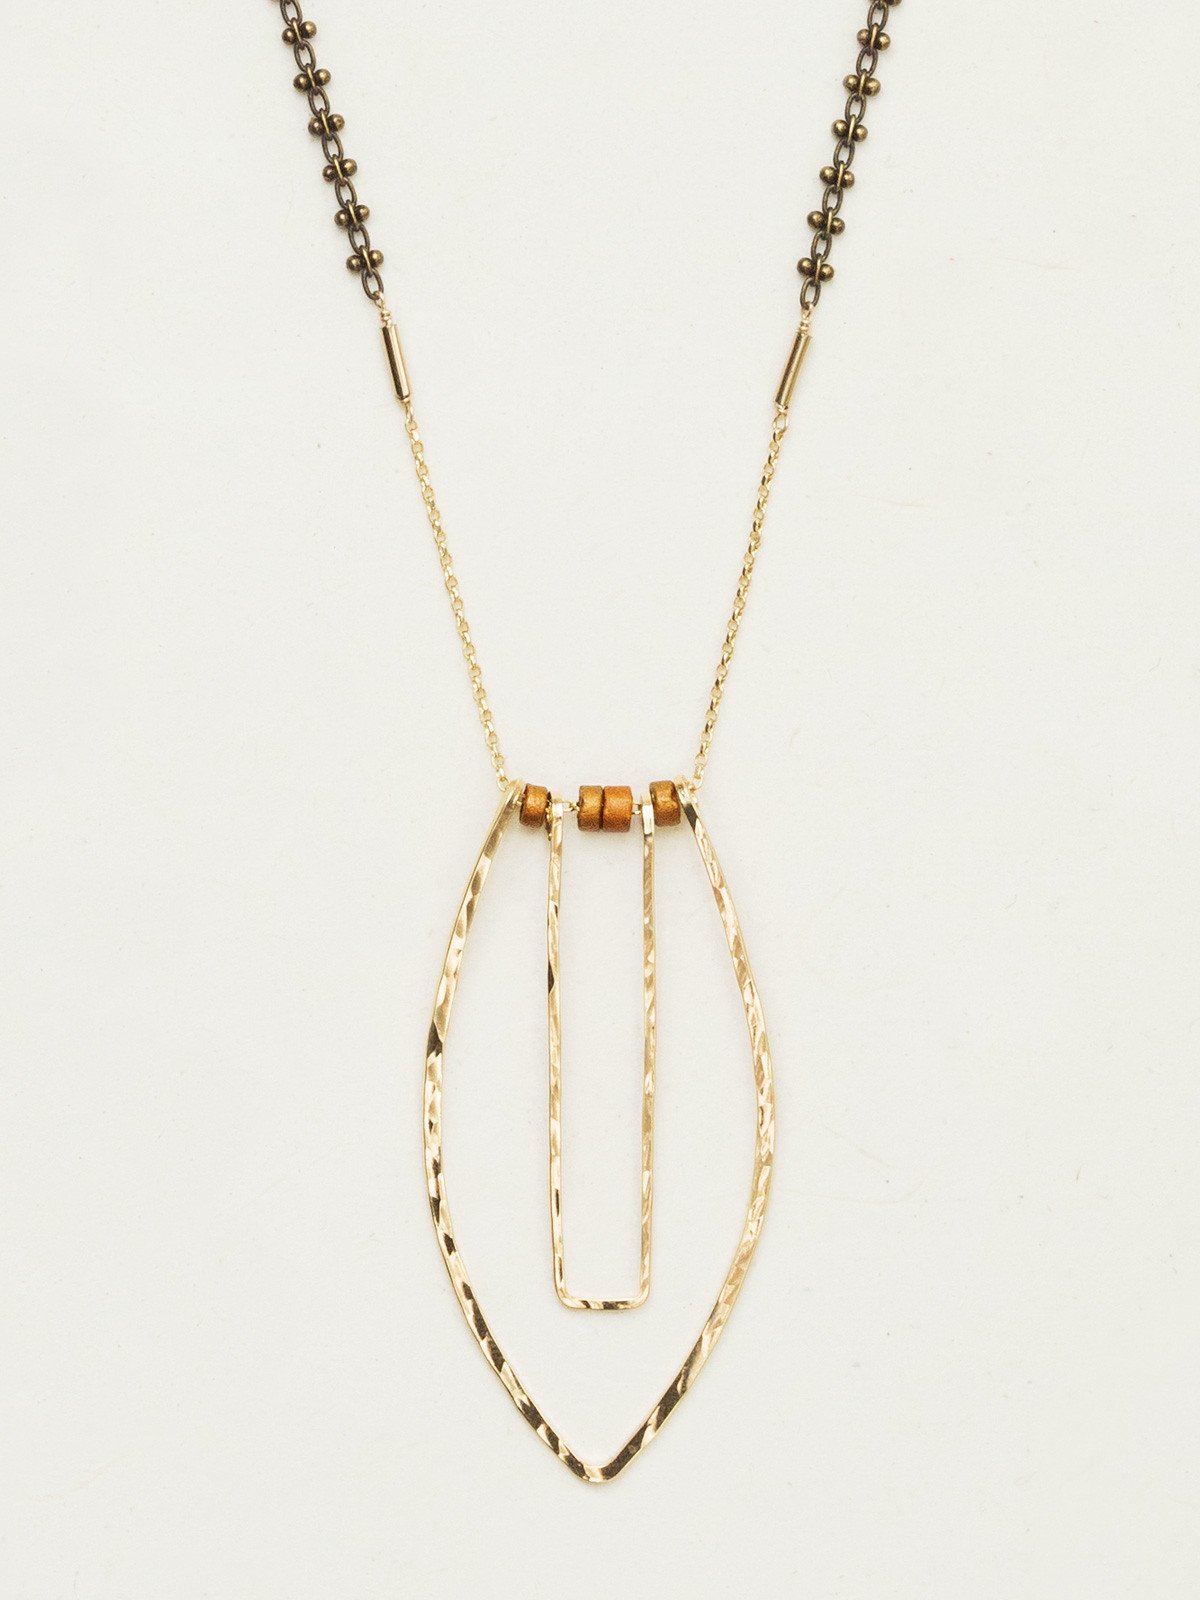 Insights necklace by jewelry designer Holly Yashi